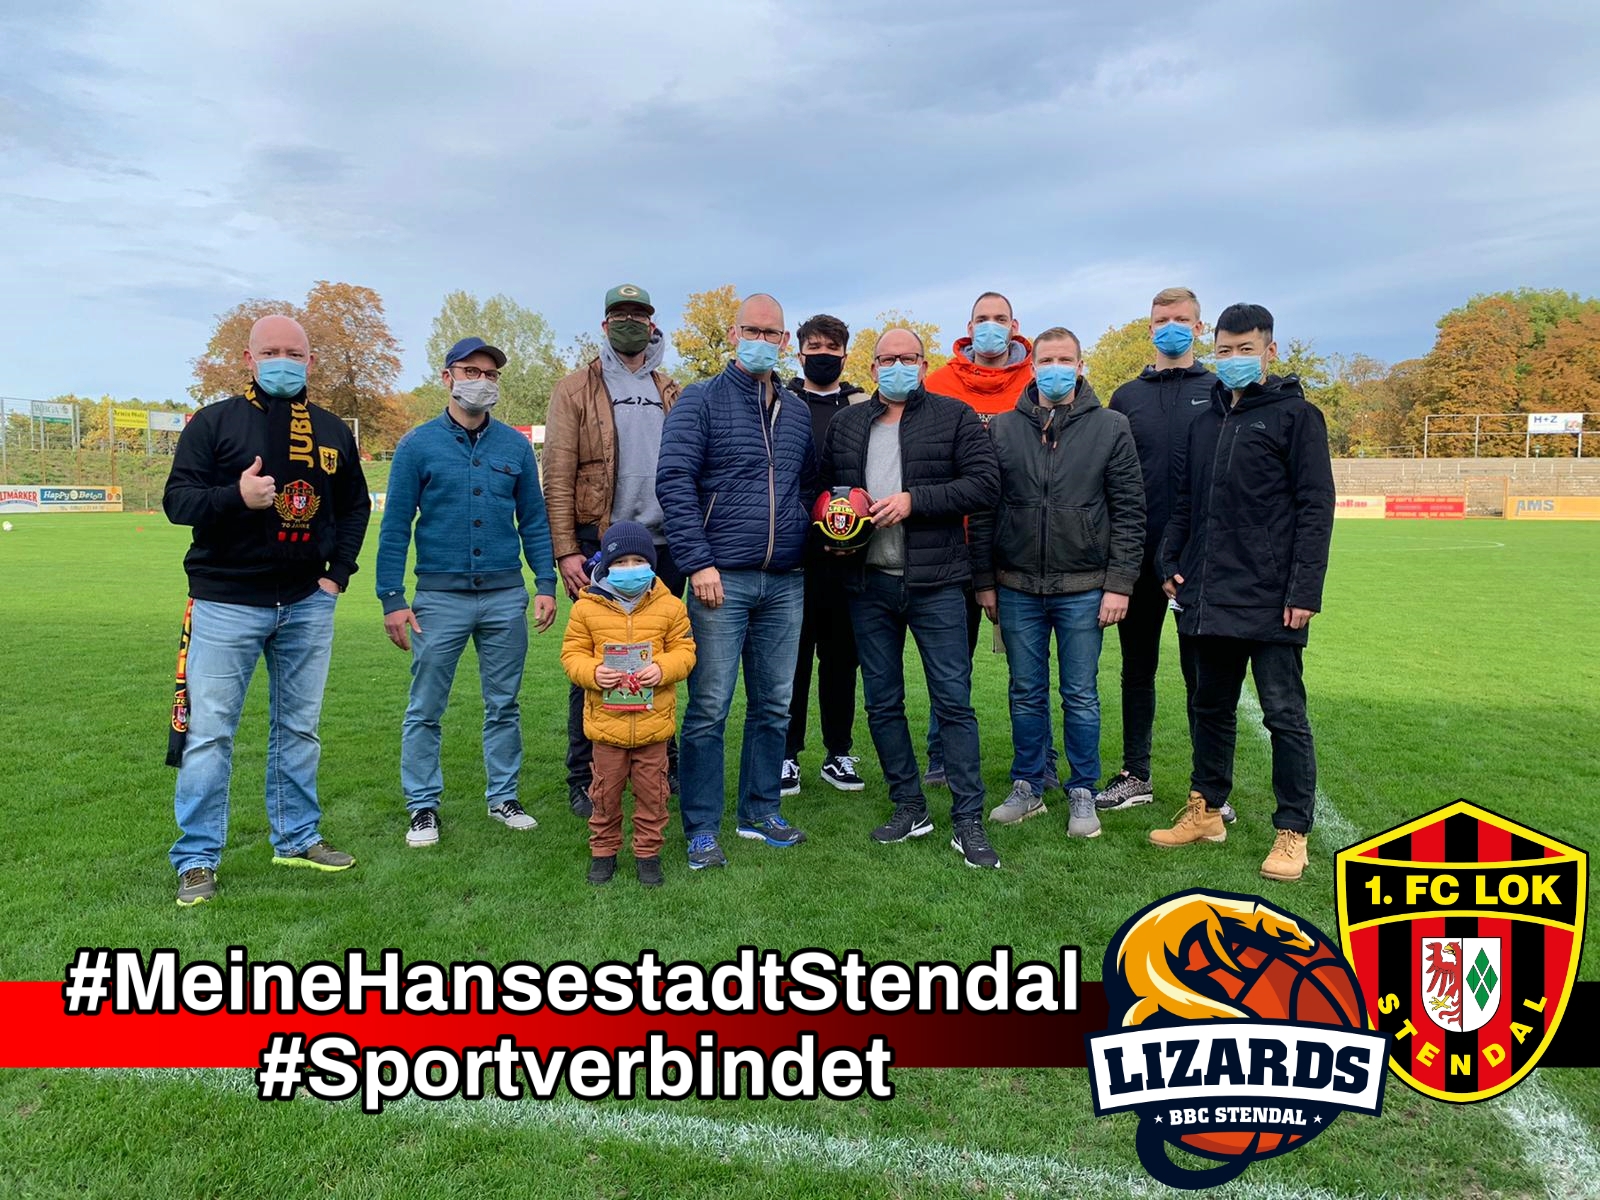 #Sportverbindet 3 - 1. FC Lok Stendal